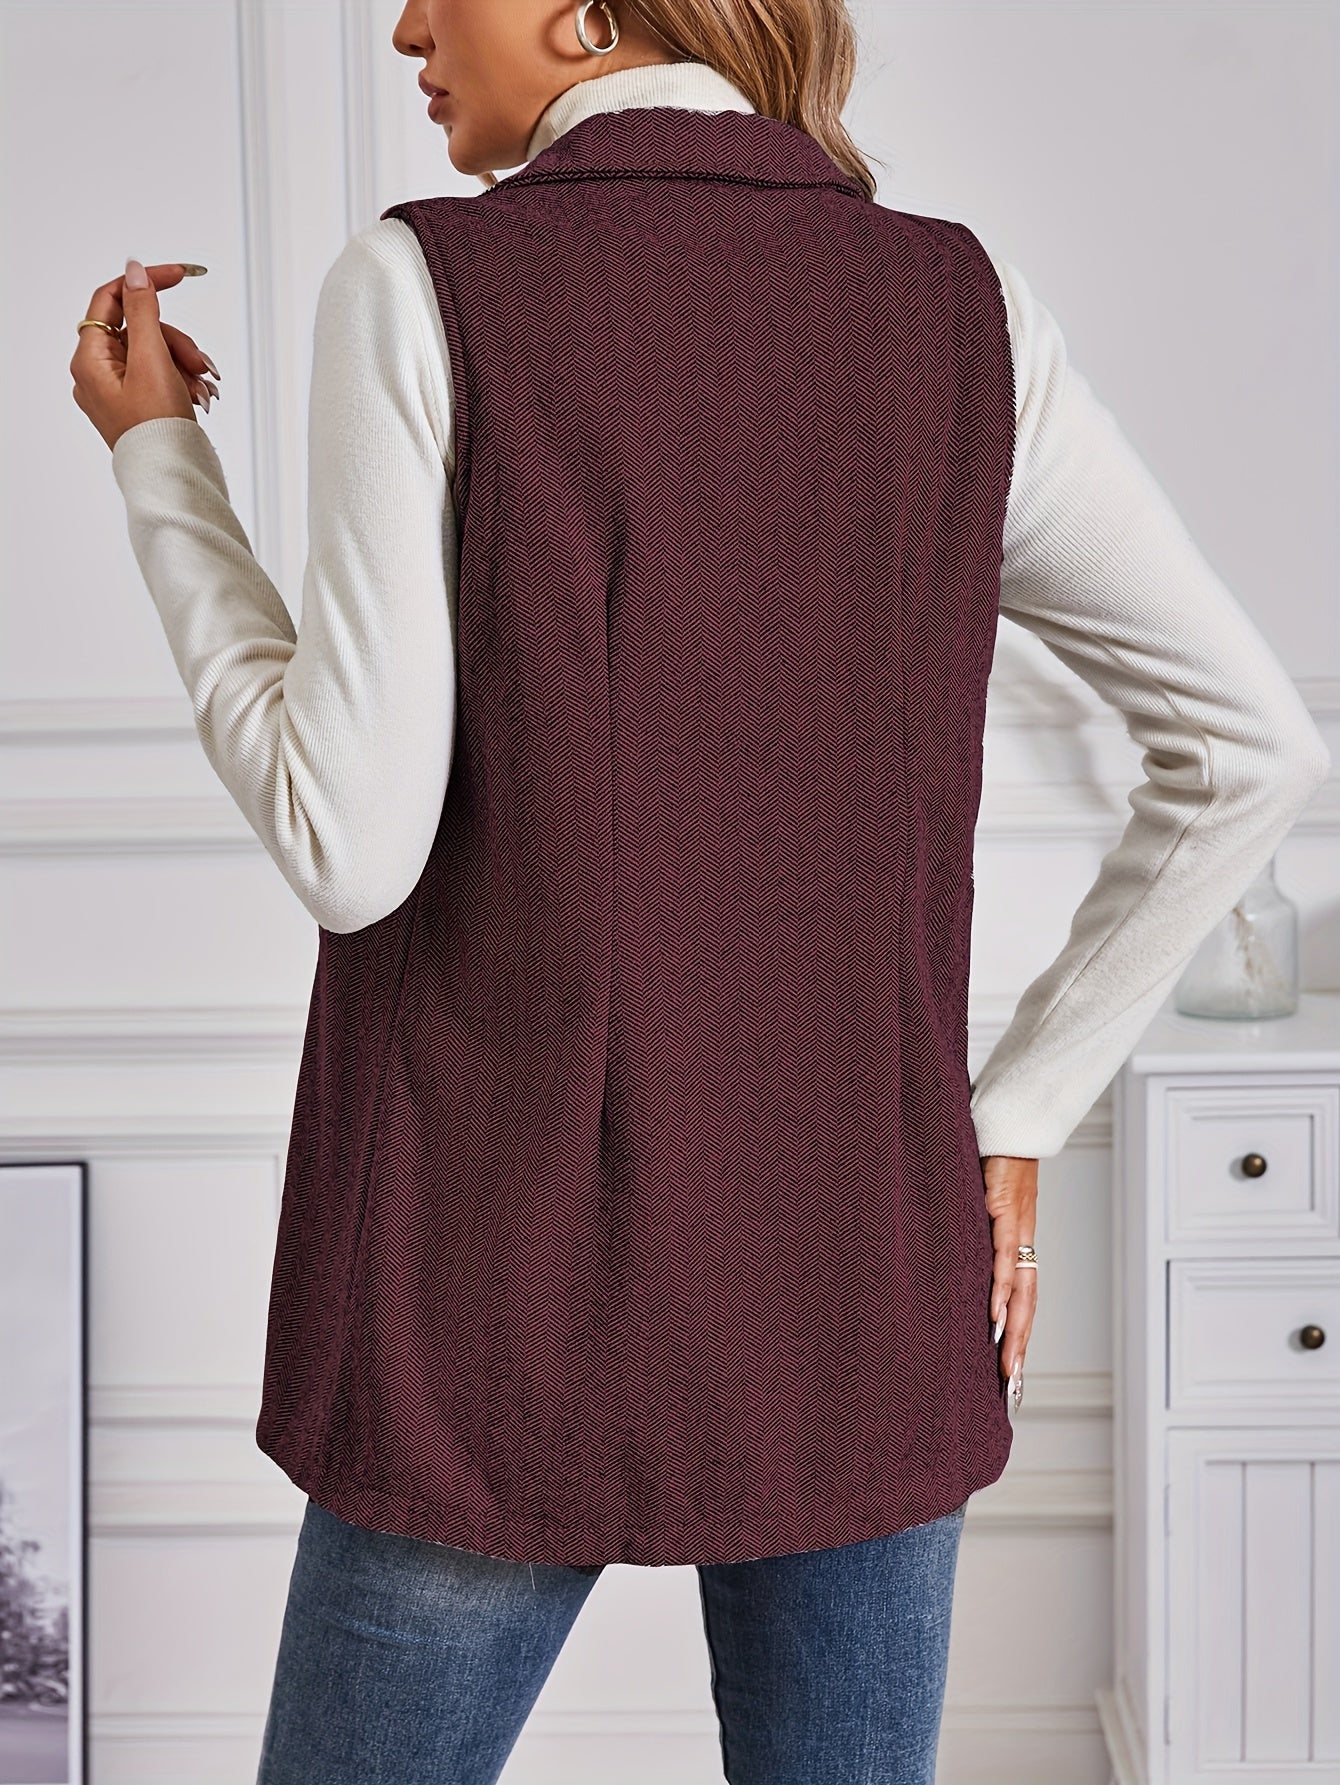 Antmvs Double Breasted Lapel Vest, Elegant Sleeveless Blazer For Office & Work, Women's Clothing